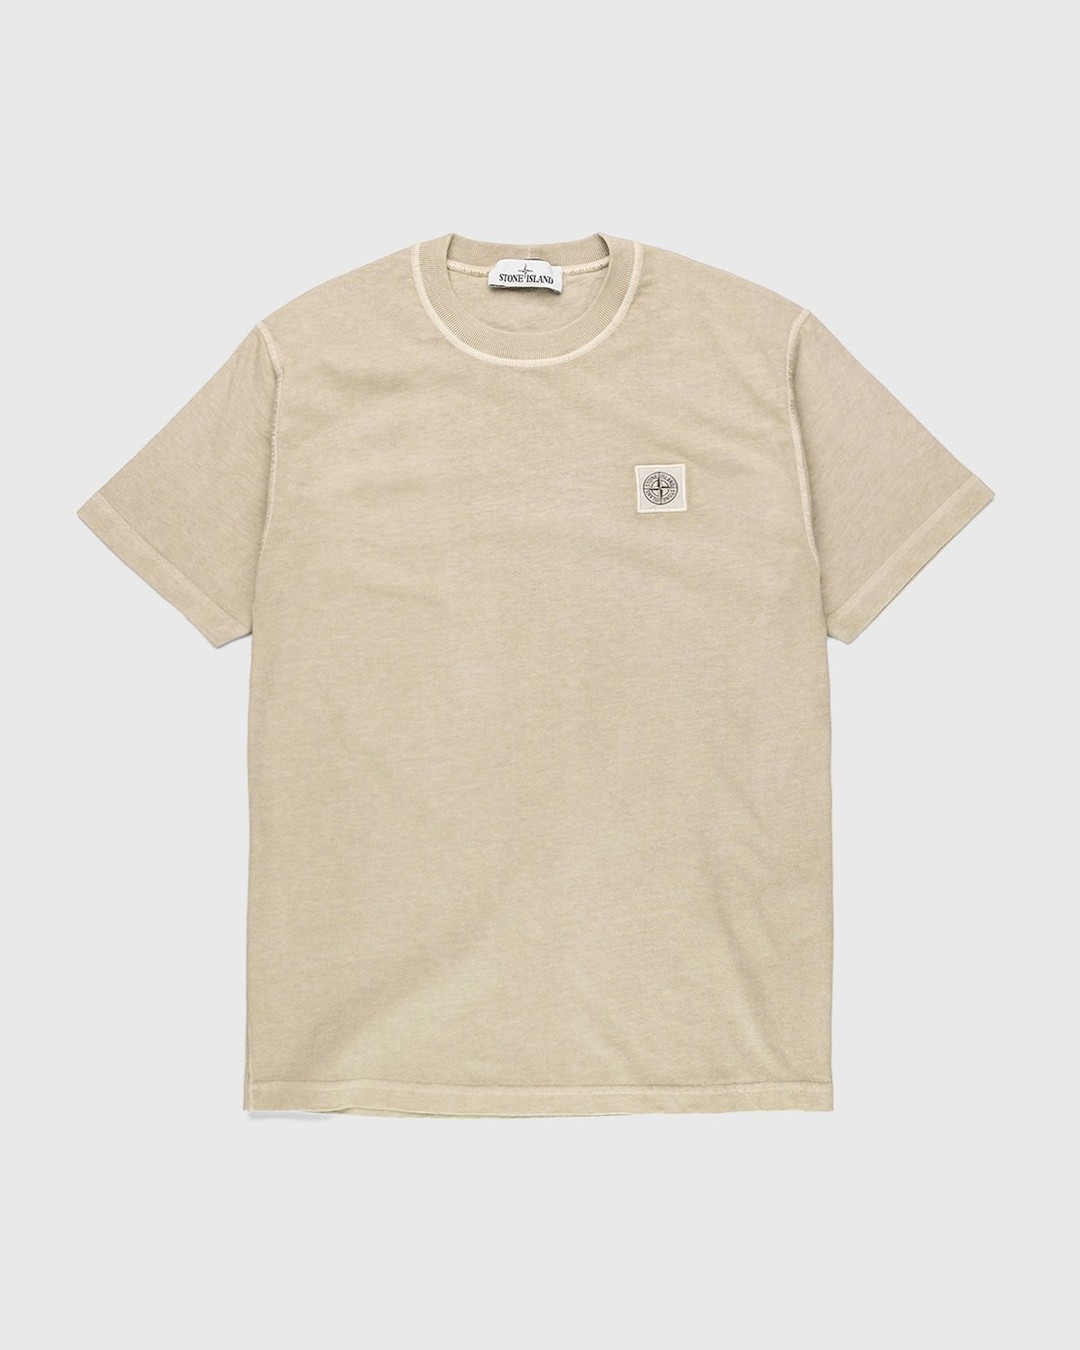 Stone Island – T-Shirt Natural Beige - Tops - Beige - Image 1